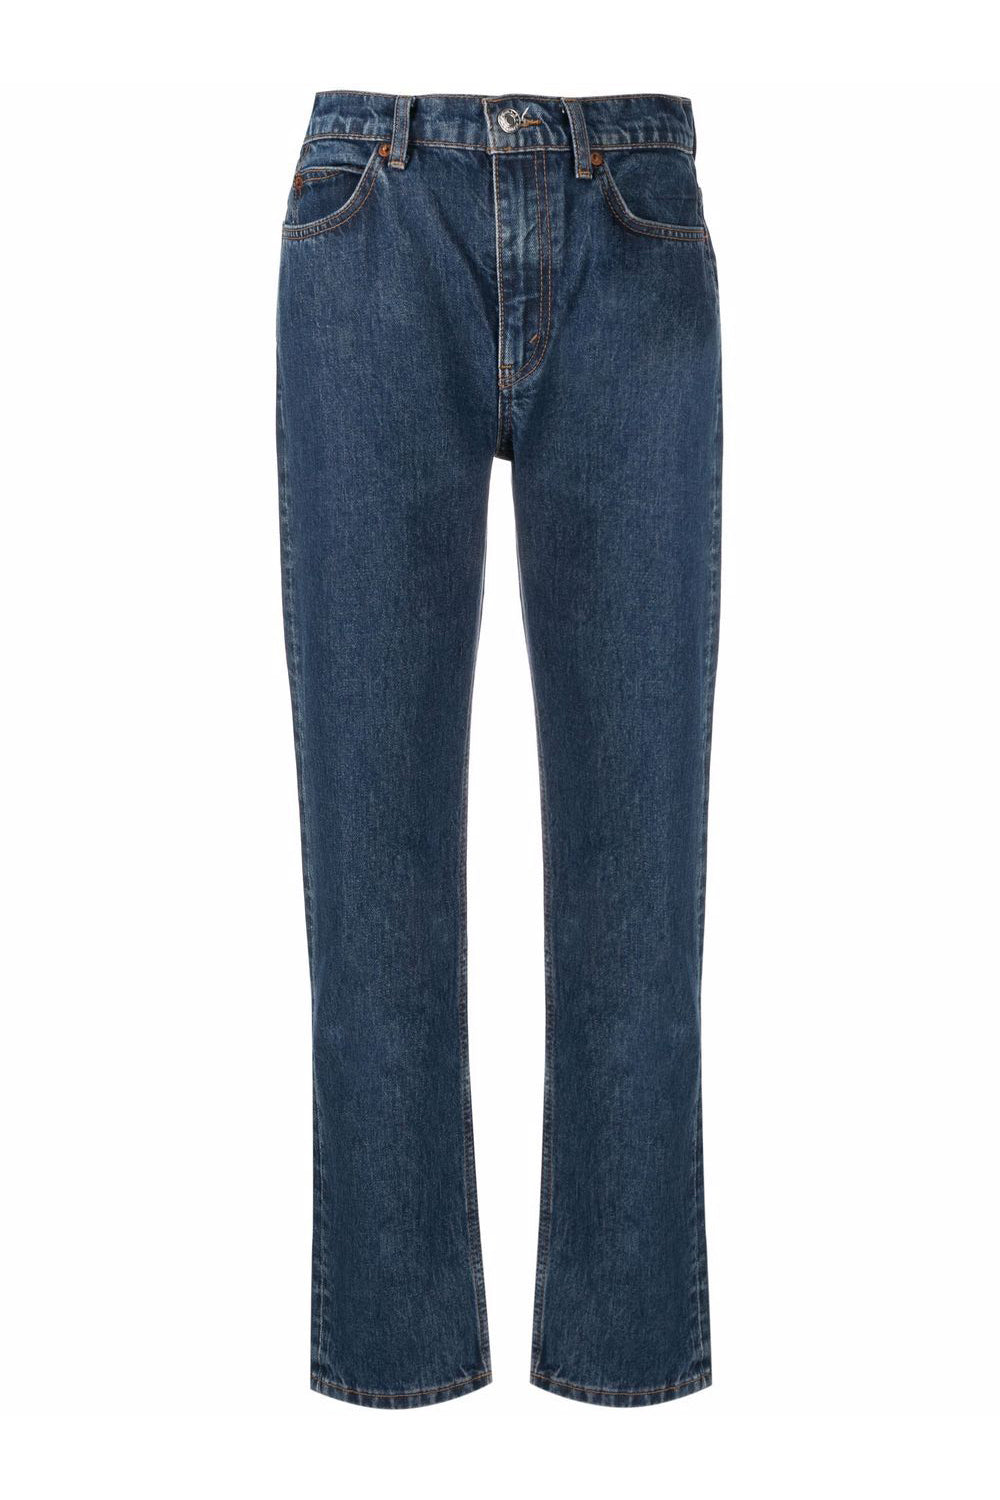 70s straight leg jeans